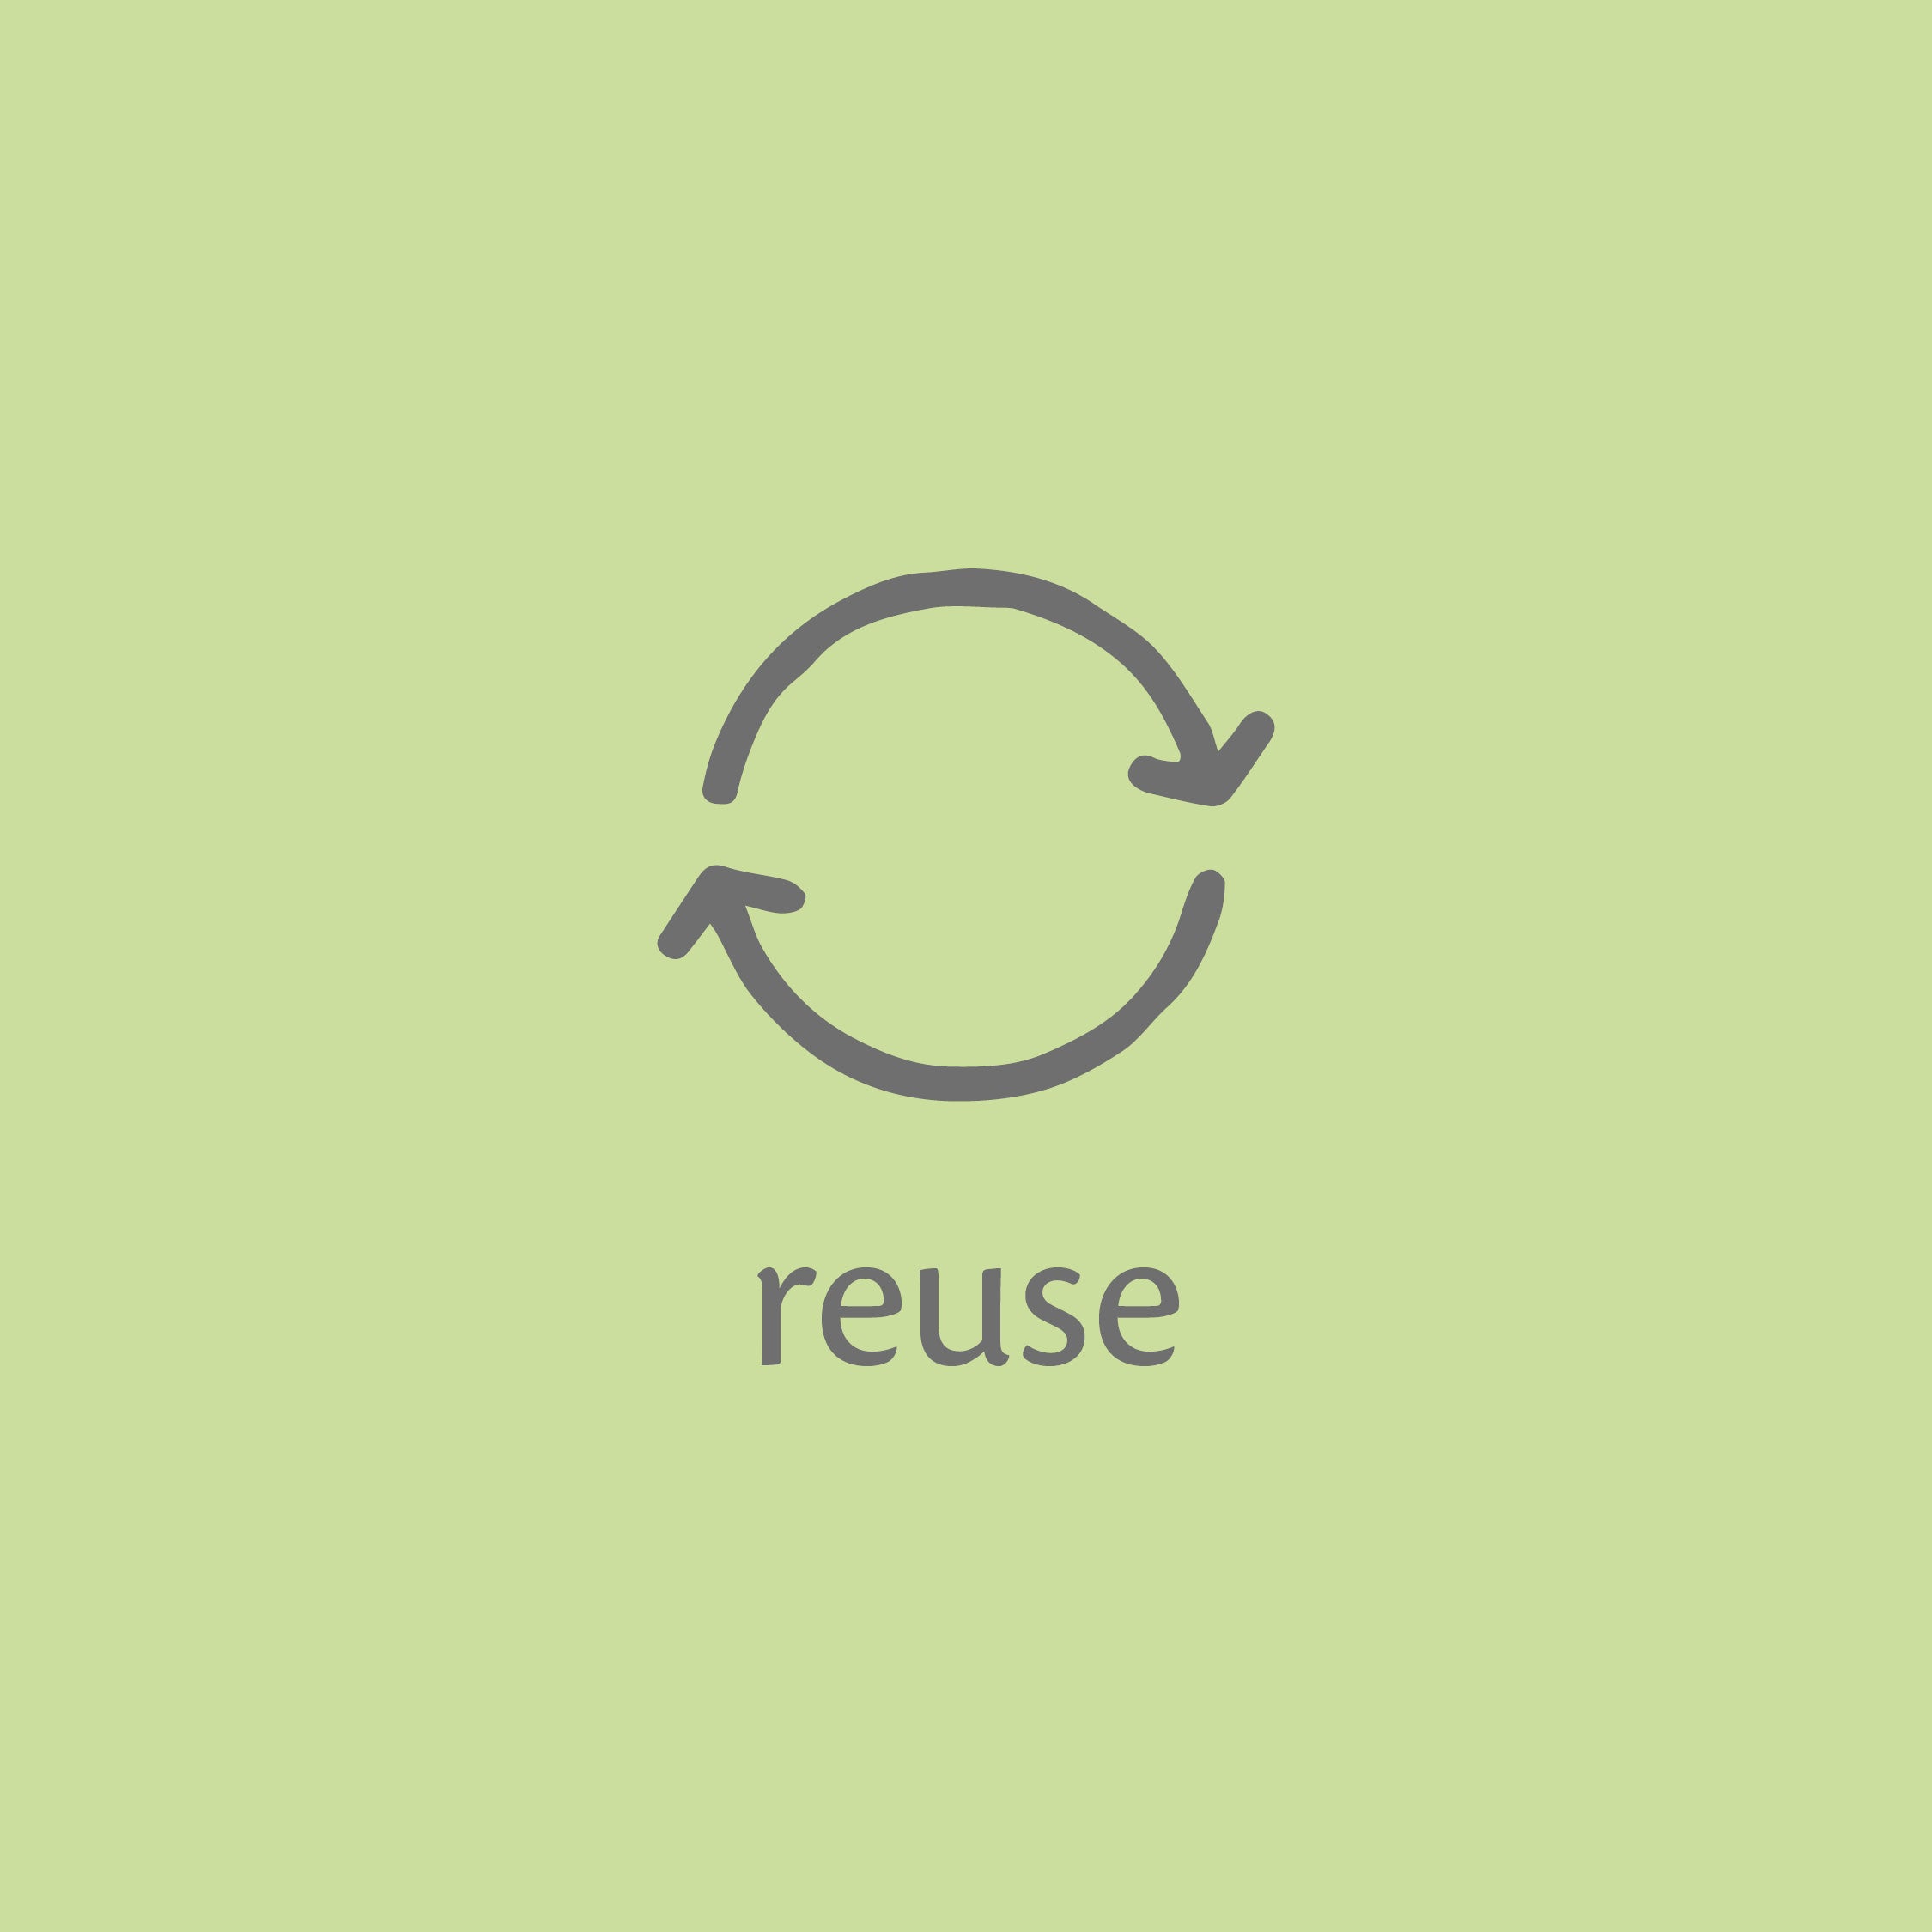 Zero Waste reuse